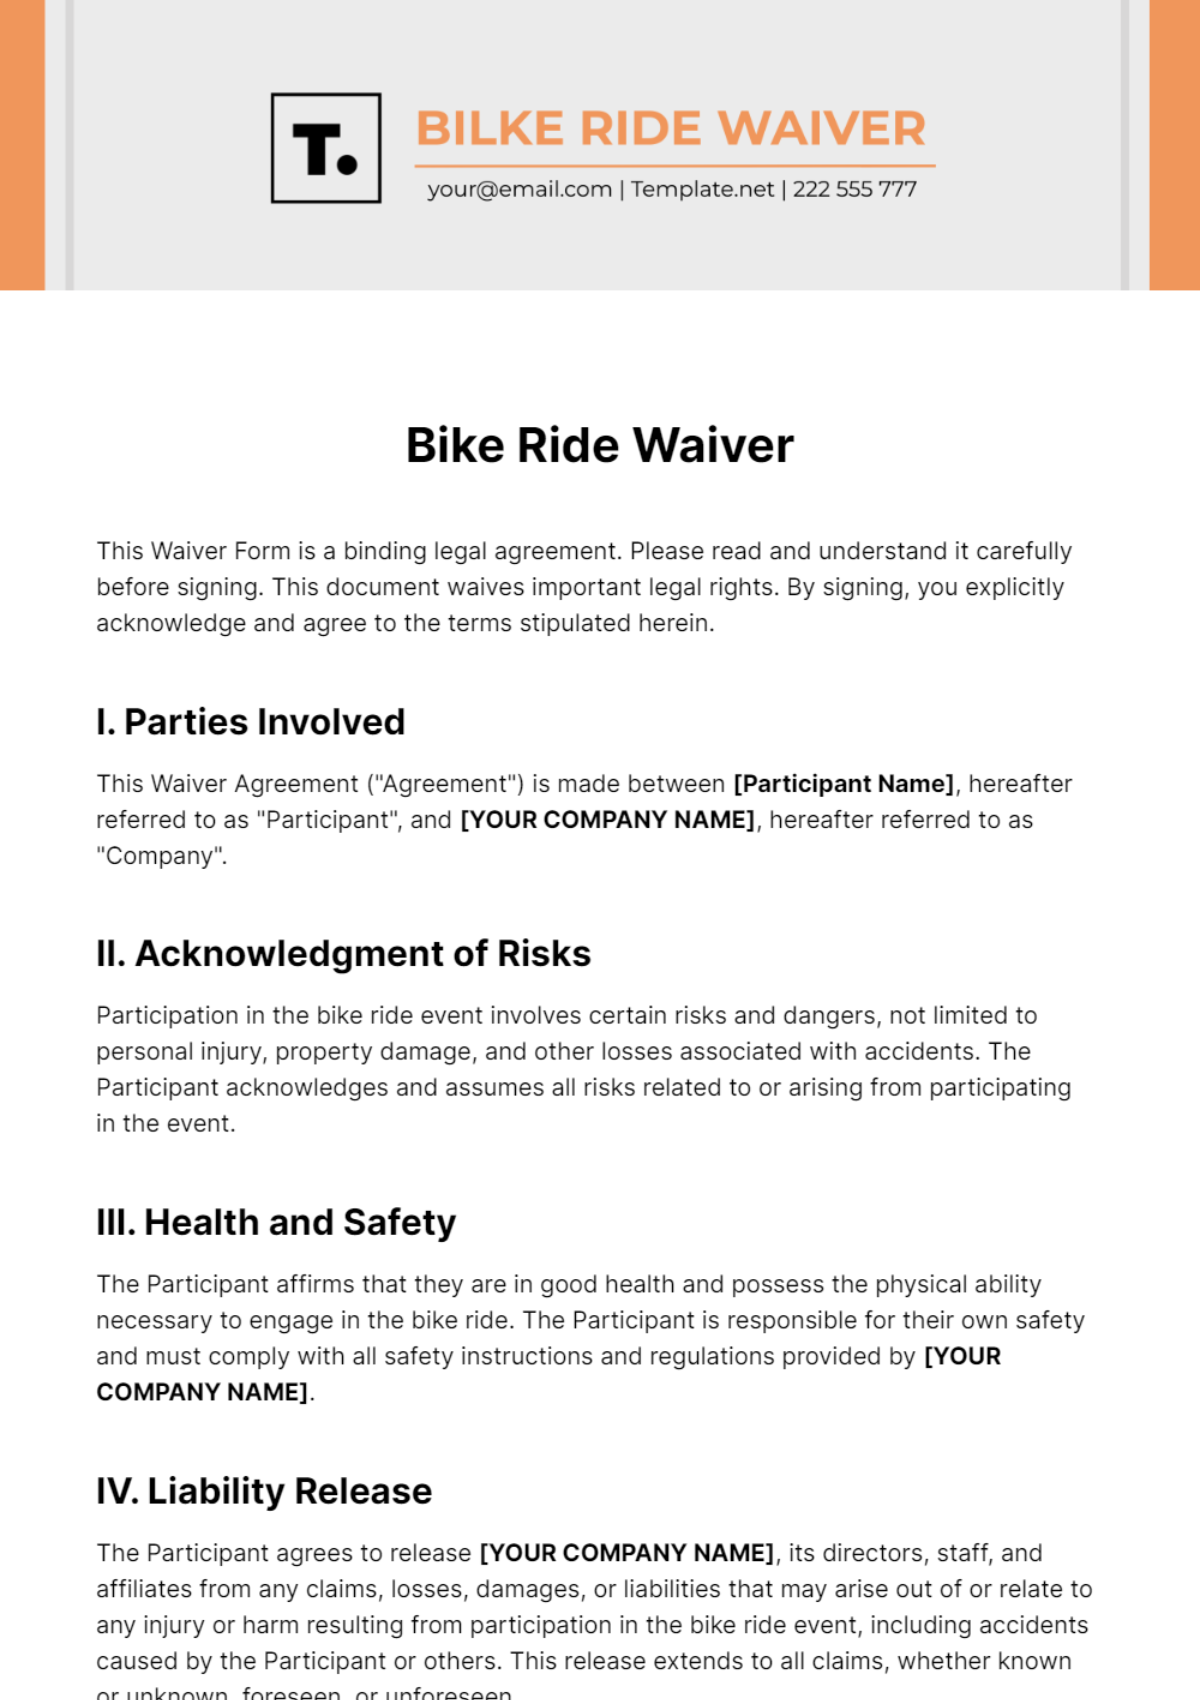 Bike Ride Waiver Template